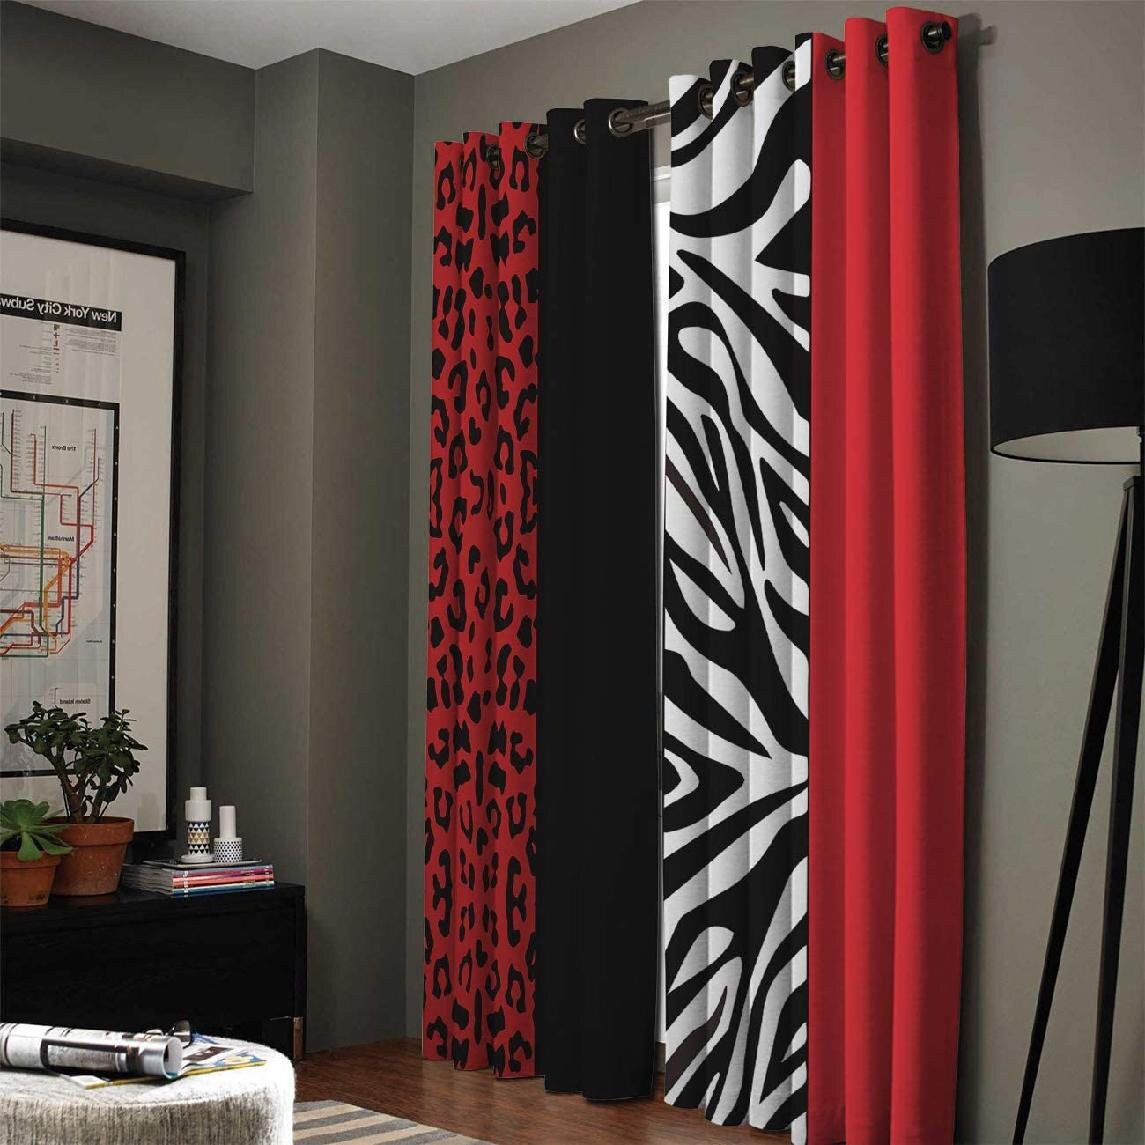 3D Effect Blackout Curtains Living Room Bedroom Window Drapes 2 Panel Set 